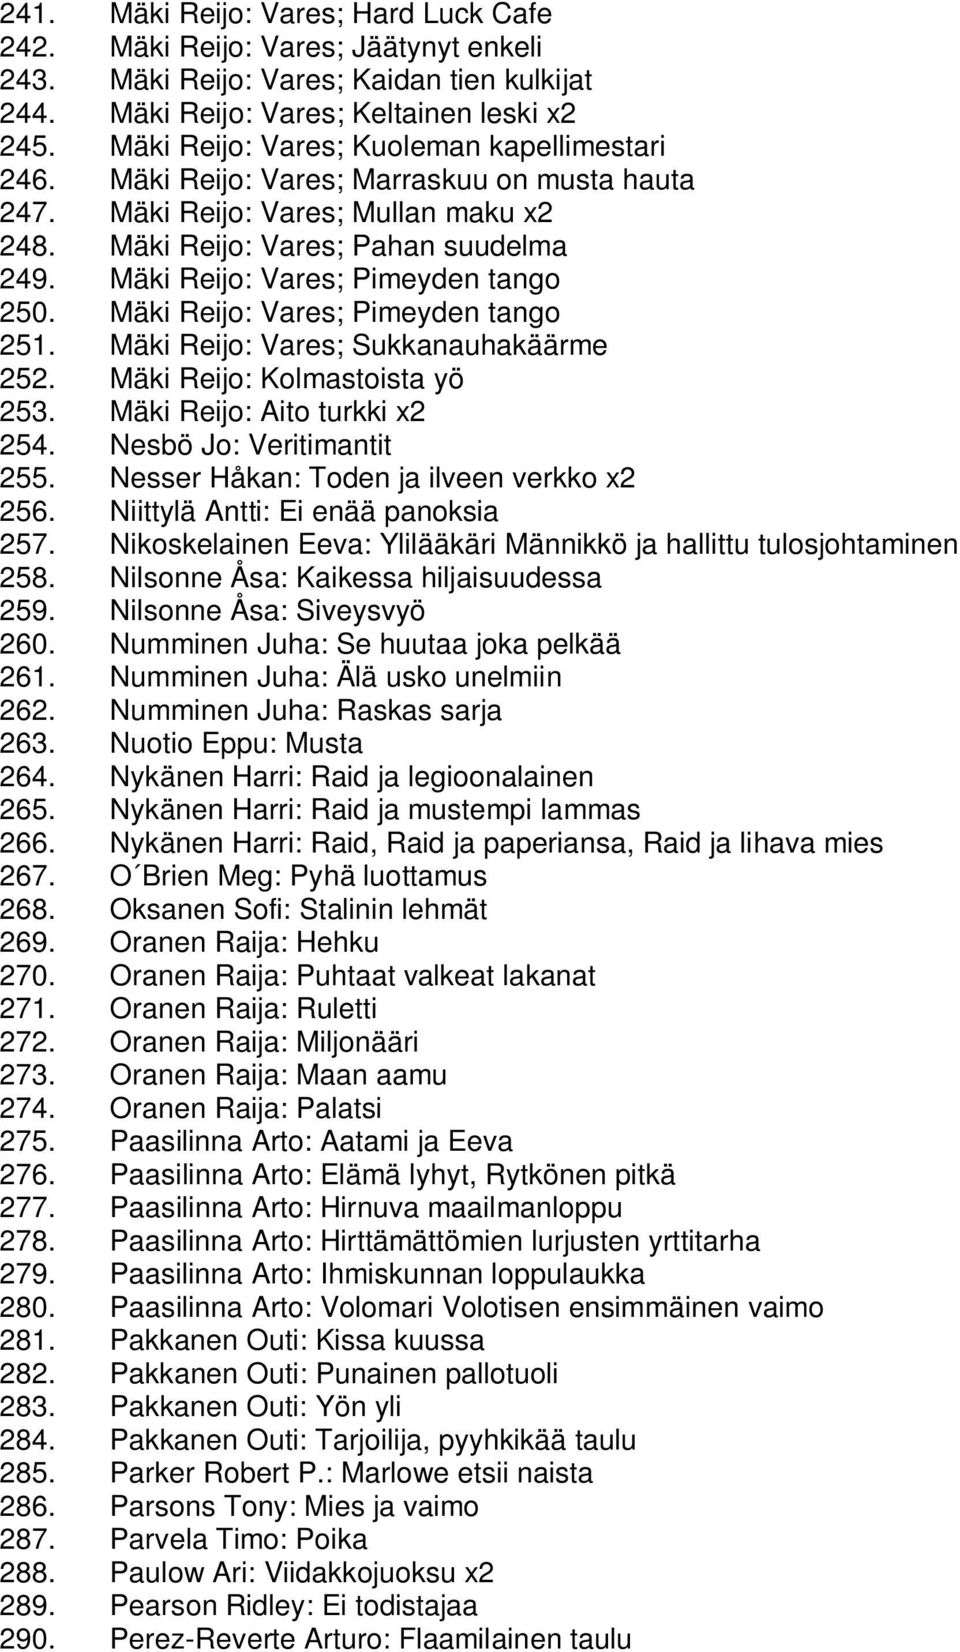 Mäki Reijo: Vares; Pimeyden tango 250. Mäki Reijo: Vares; Pimeyden tango 251. Mäki Reijo: Vares; Sukkanauhakäärme 252. Mäki Reijo: Kolmastoista yö 253. Mäki Reijo: Aito turkki x2 254.